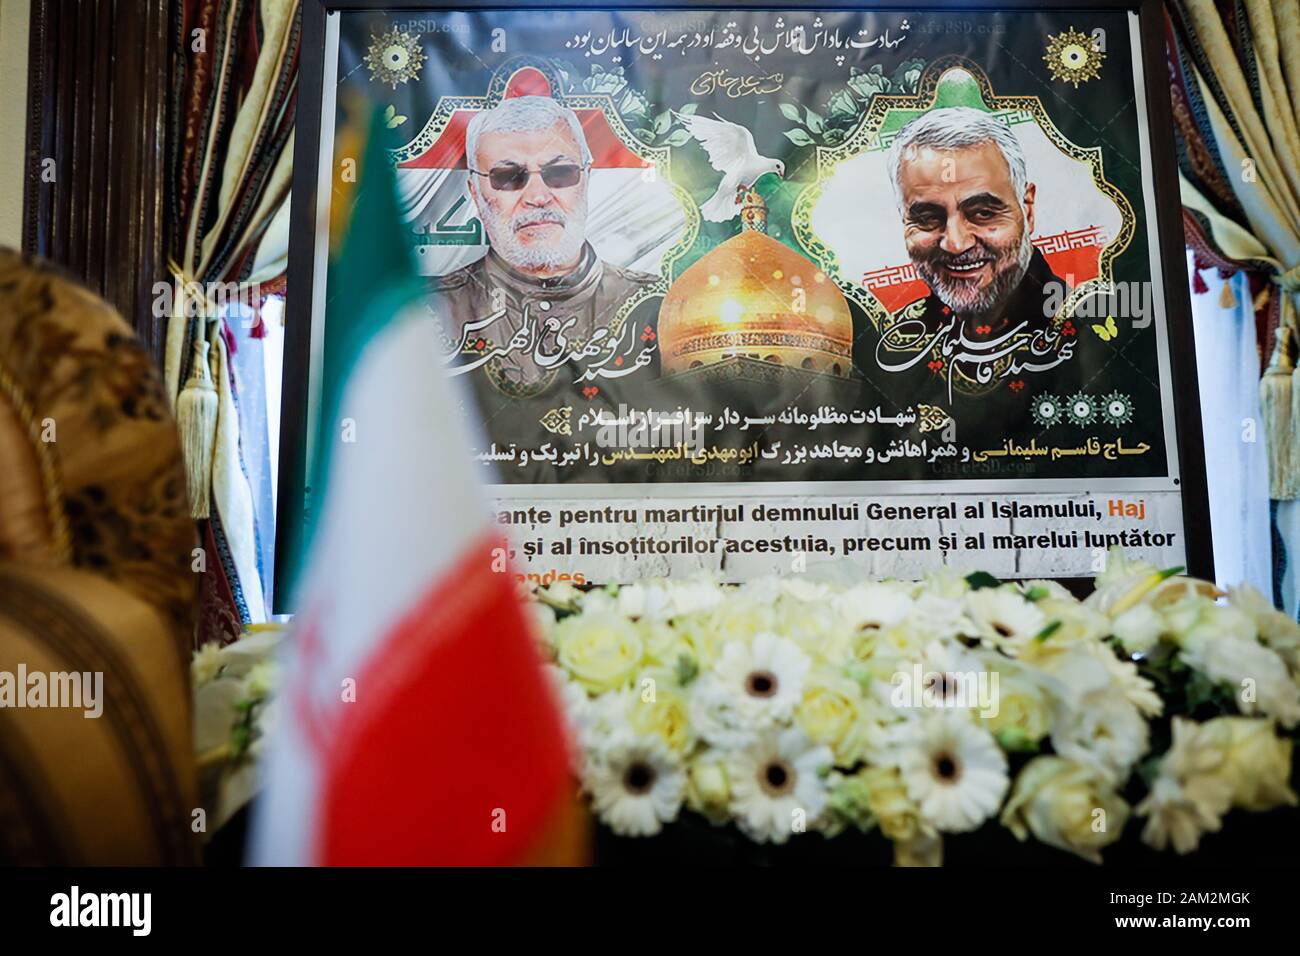 Bucharest, Romania - January 10, 2020: Picture showing iranian general Qassim Soleimani and iraqi Abu Mahdi al-Mohandes at the Iranian embassy in Buch Stock Photo